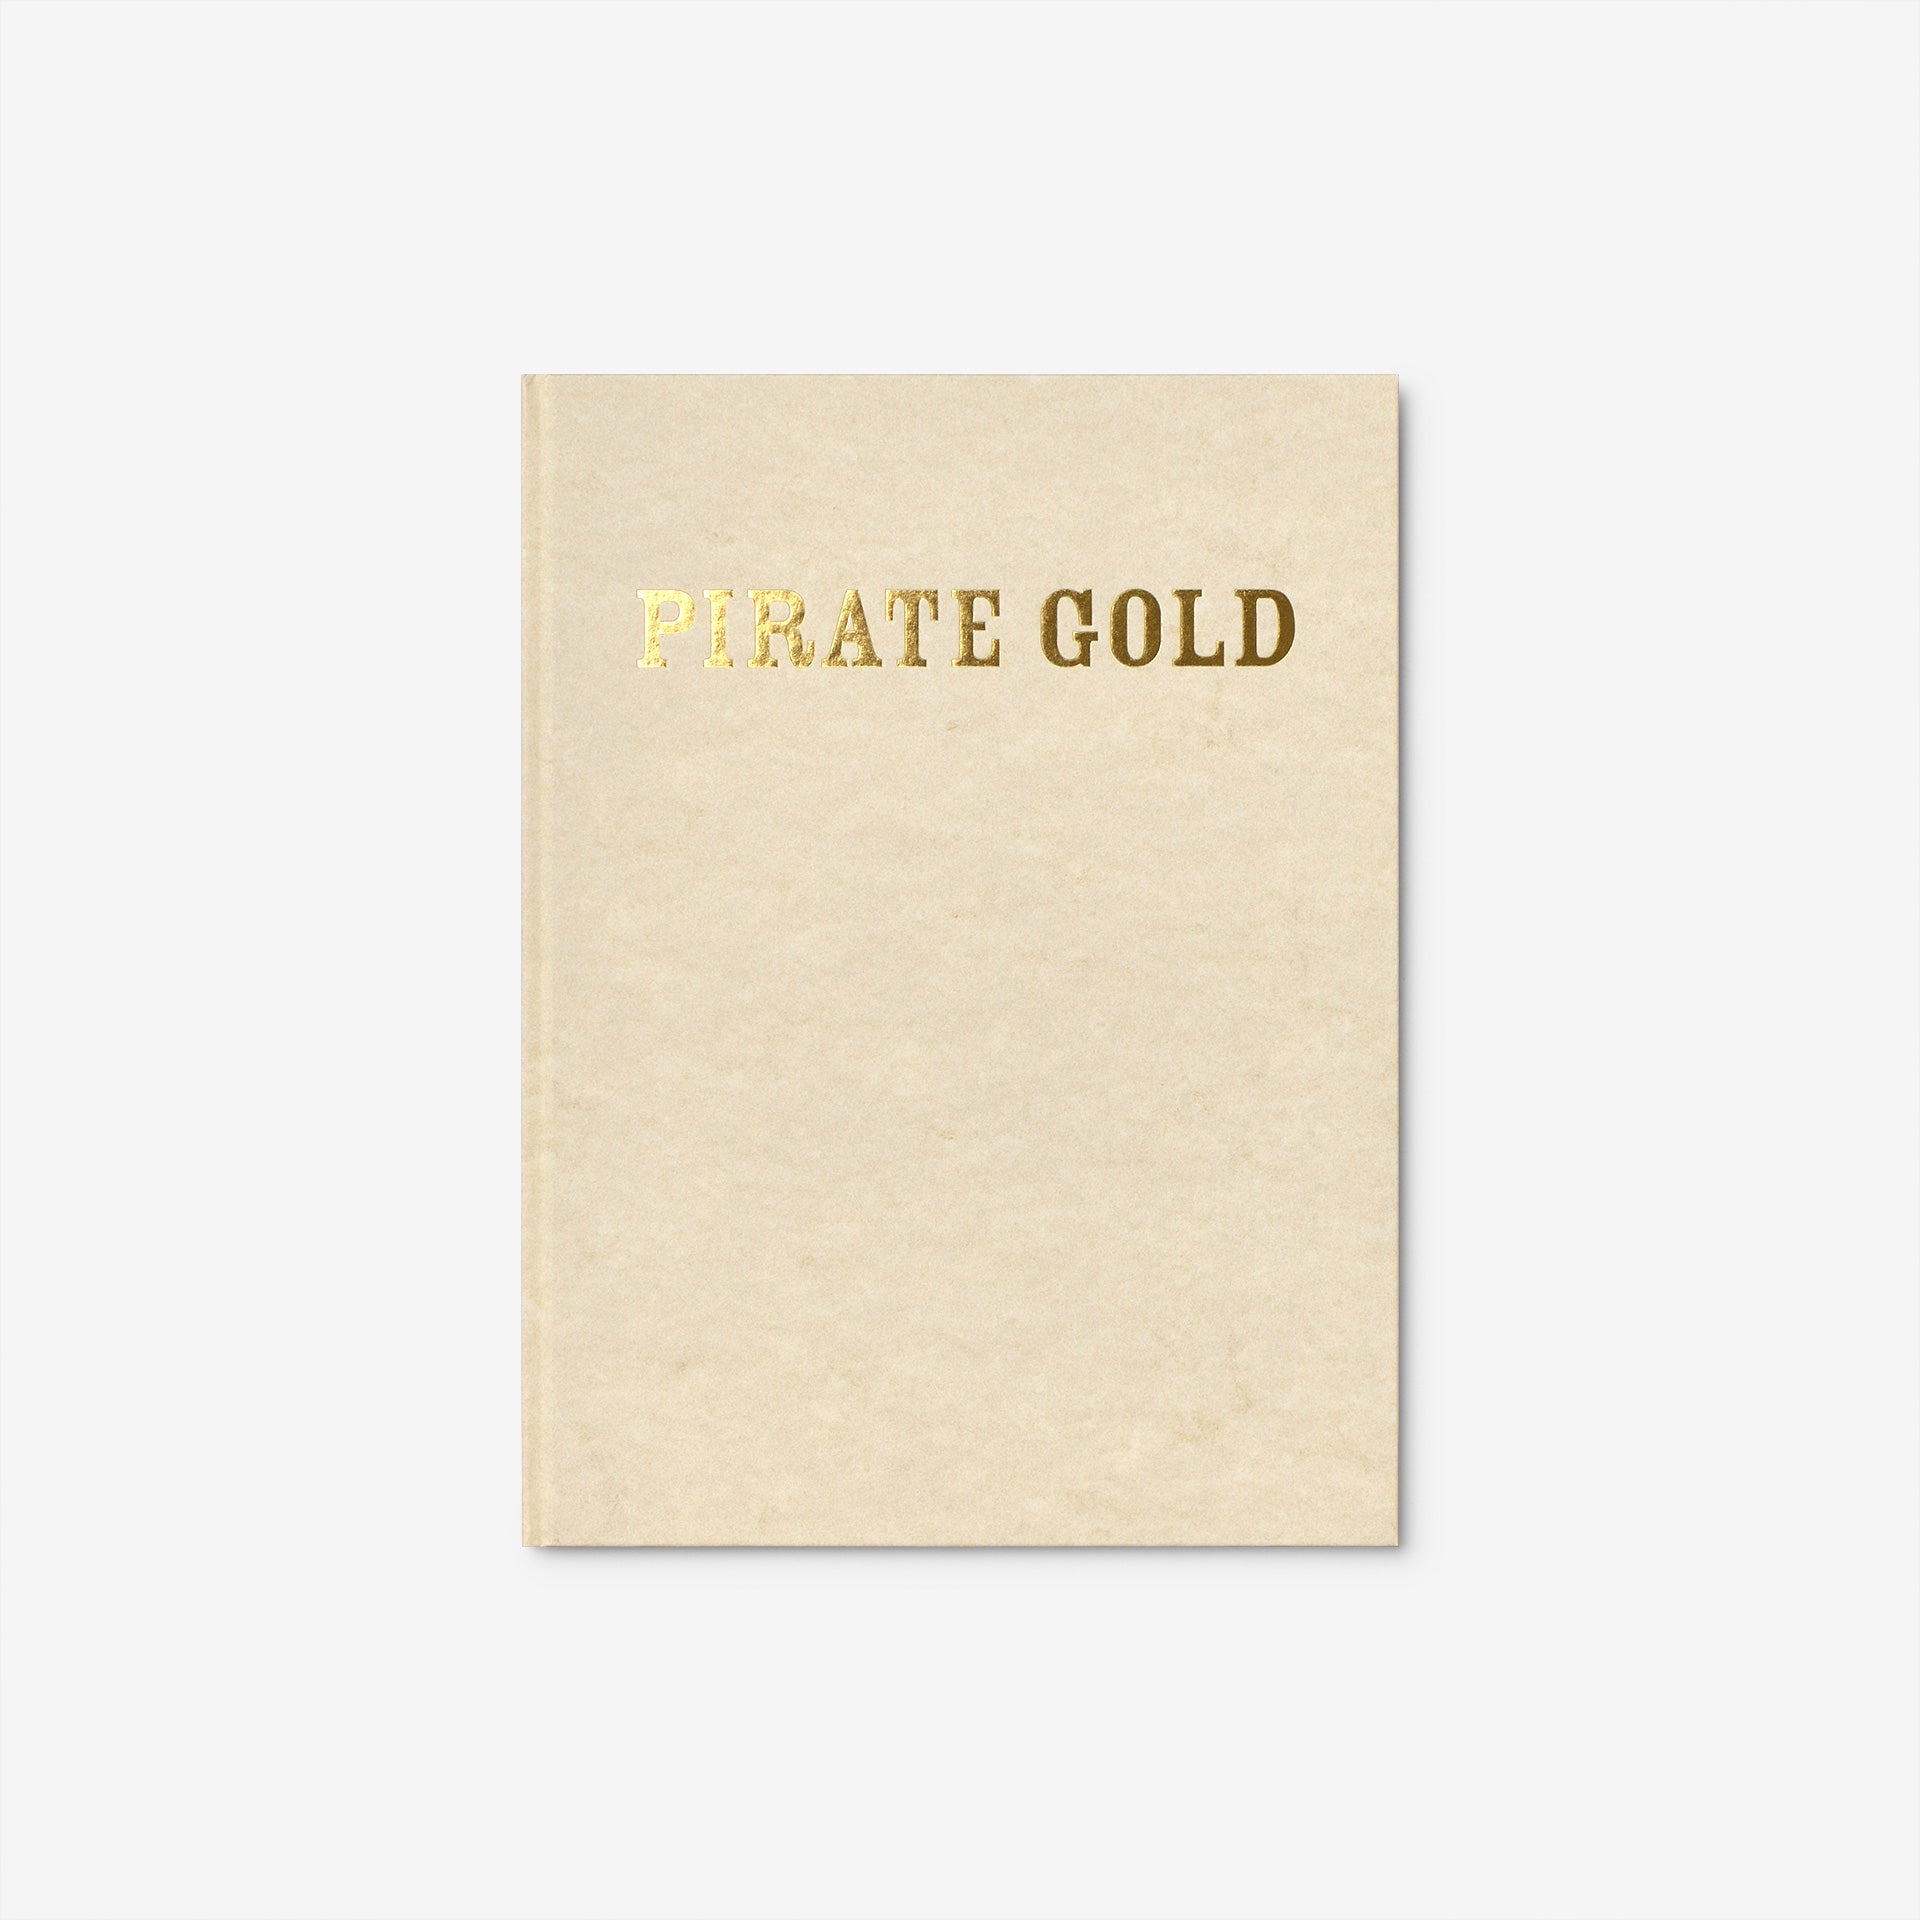 Niklaus Ruegg: Pirate Gold